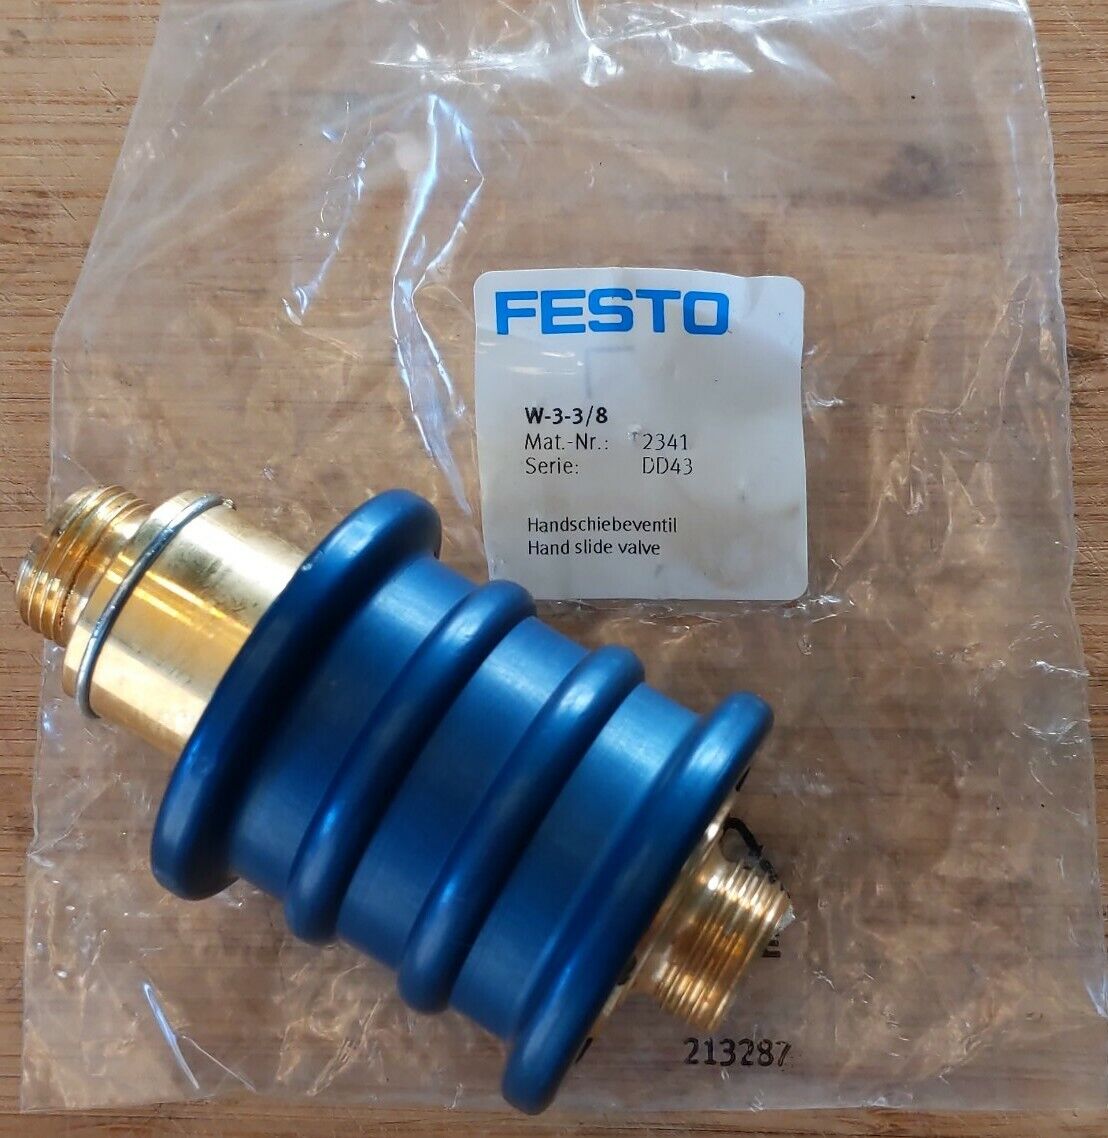 Festo W-3-3/8 Genuine Pneumatic Hand Slide Valve 2341 3/8 BSP (OV103) - 0